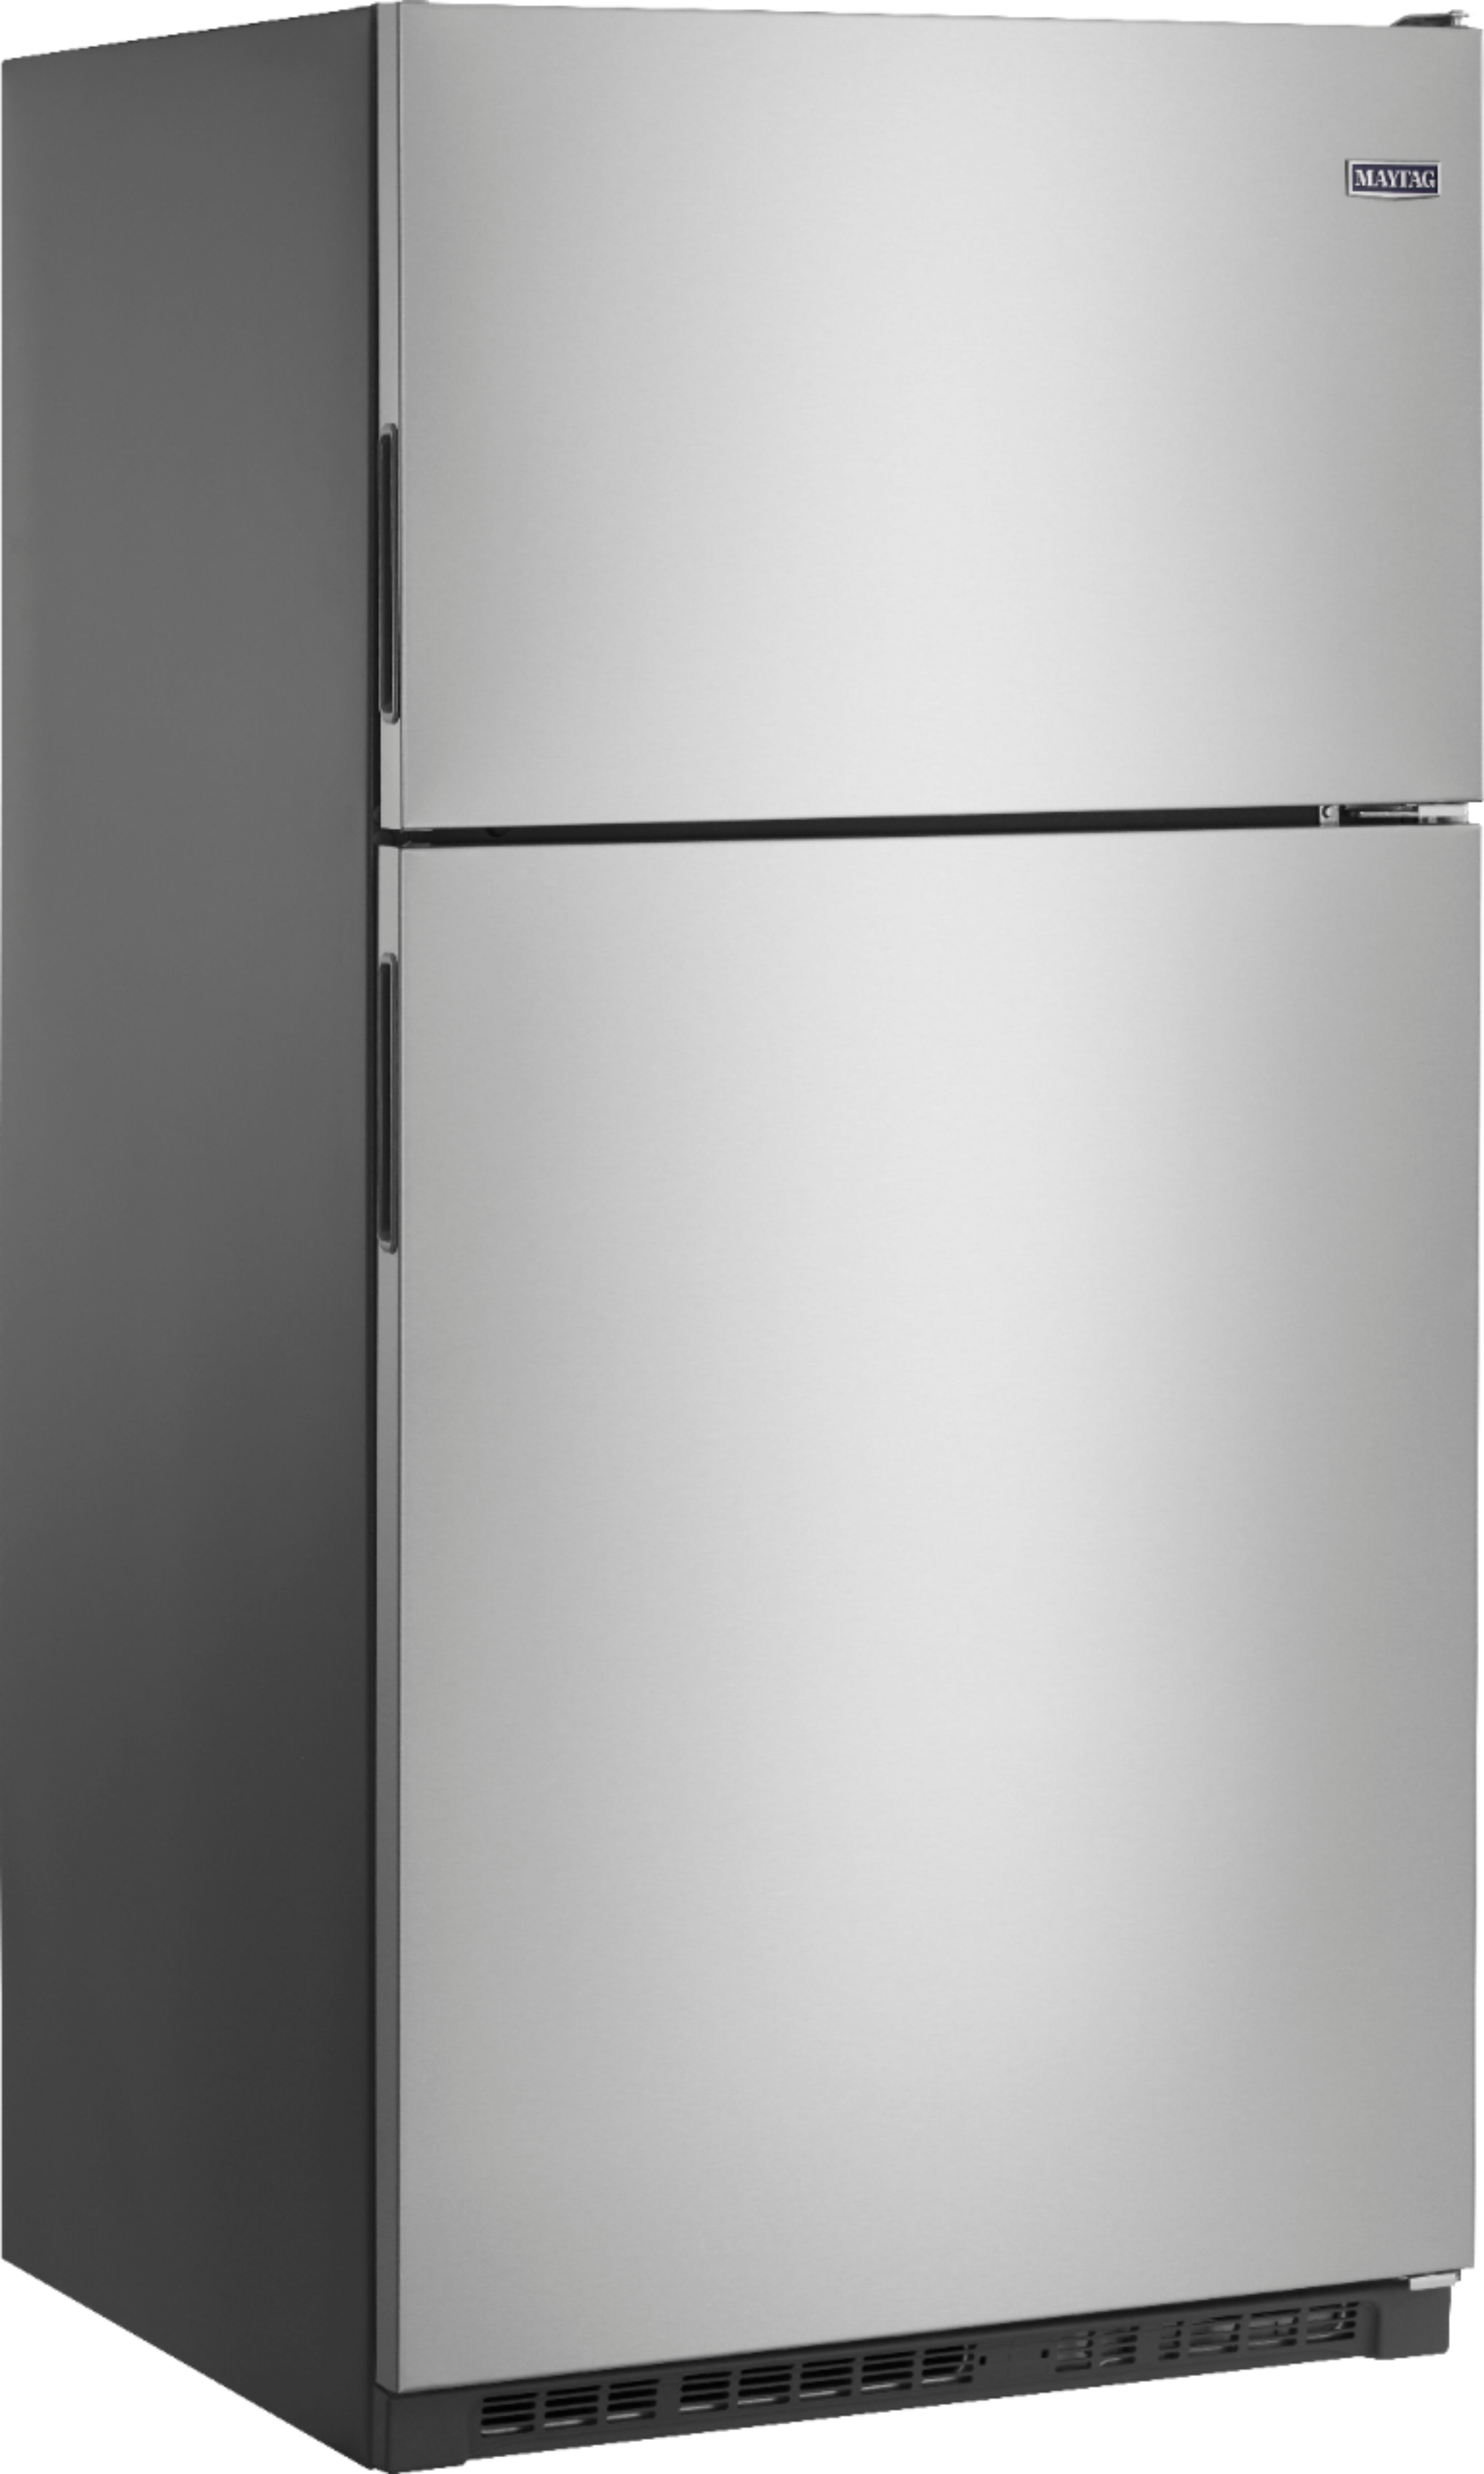 Maytag 20.5 Cu. Ft. Top-Freezer Refrigerator Fingerprint Resistant Best Fingerprint Resistant Stainless Steel Refrigerator